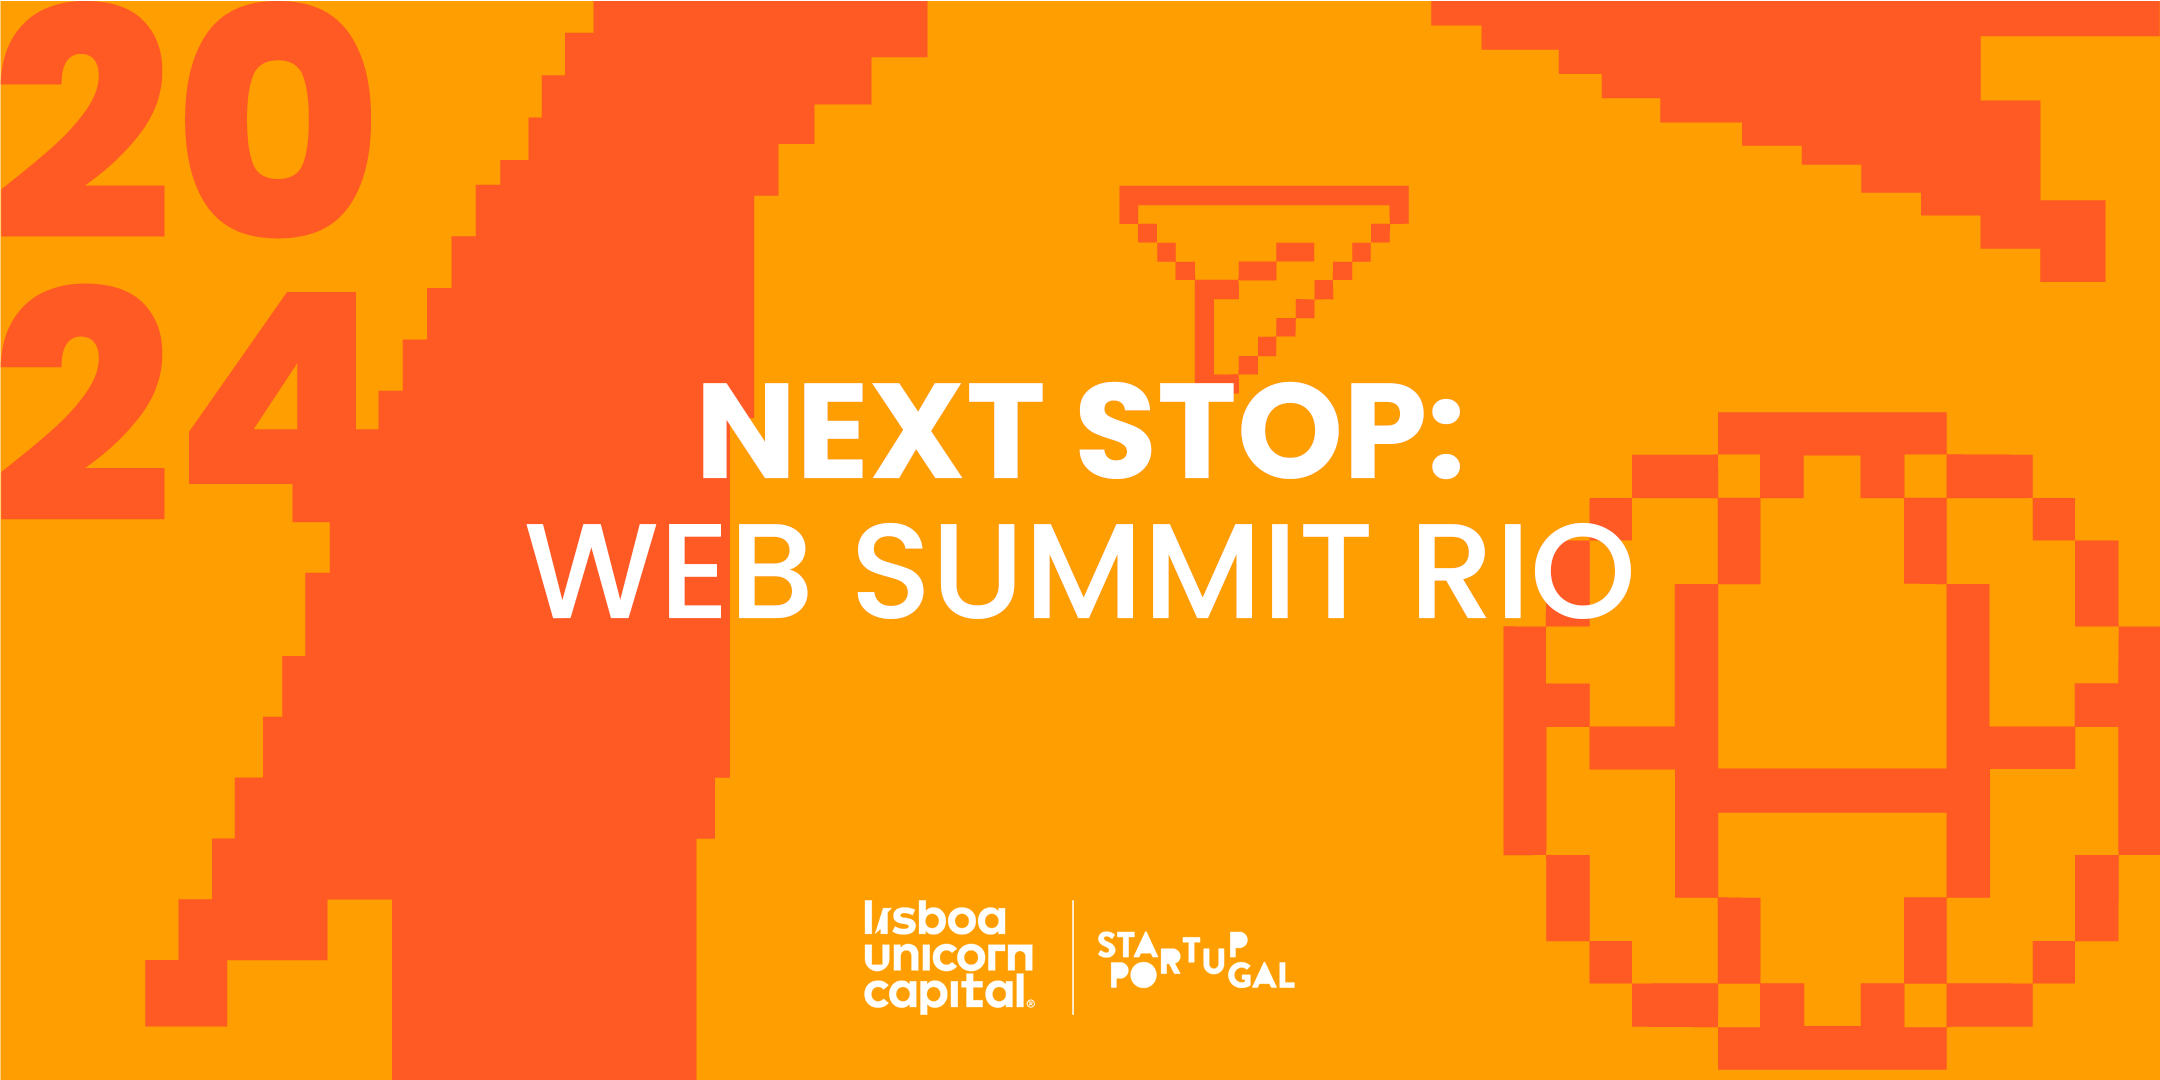 Next stop: Web Summit Rio!